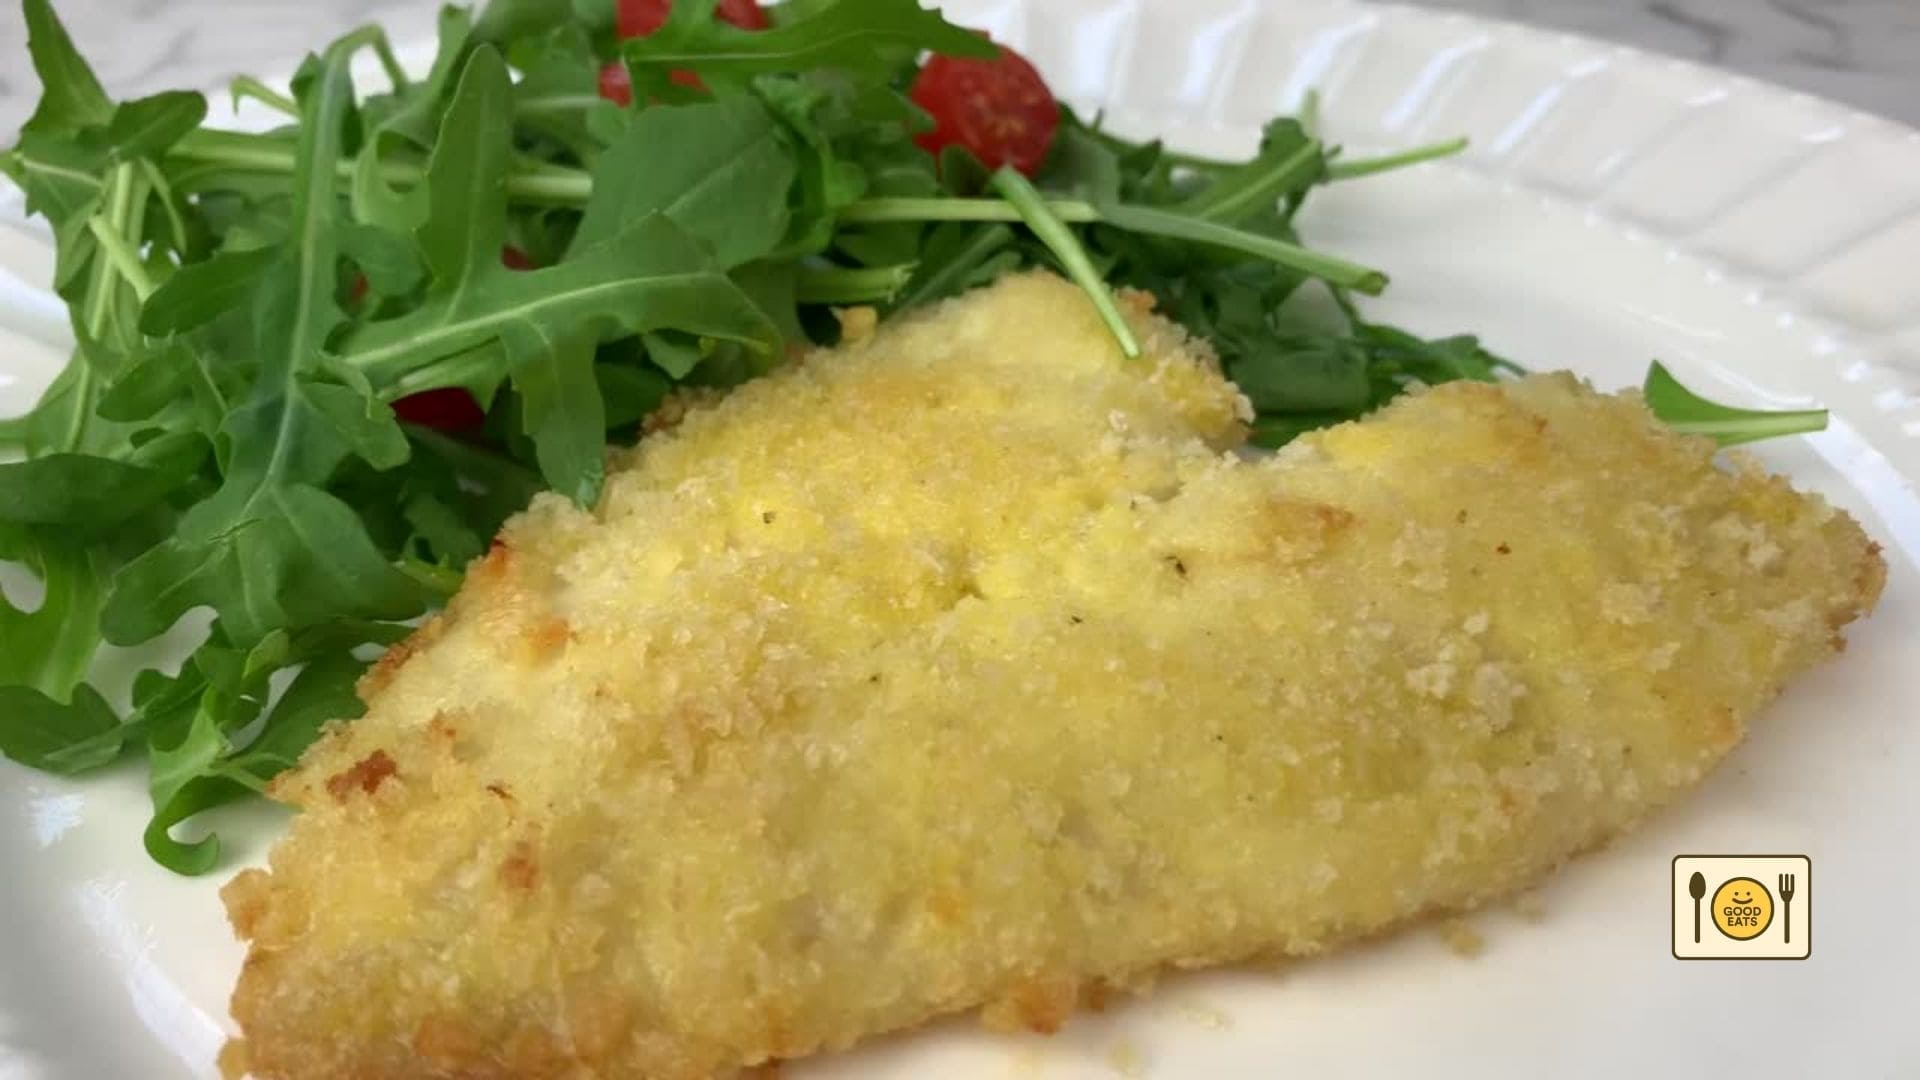 Crispy Panko Crusted Oven Baked Tilapia recipe (video) - Good Eats 101